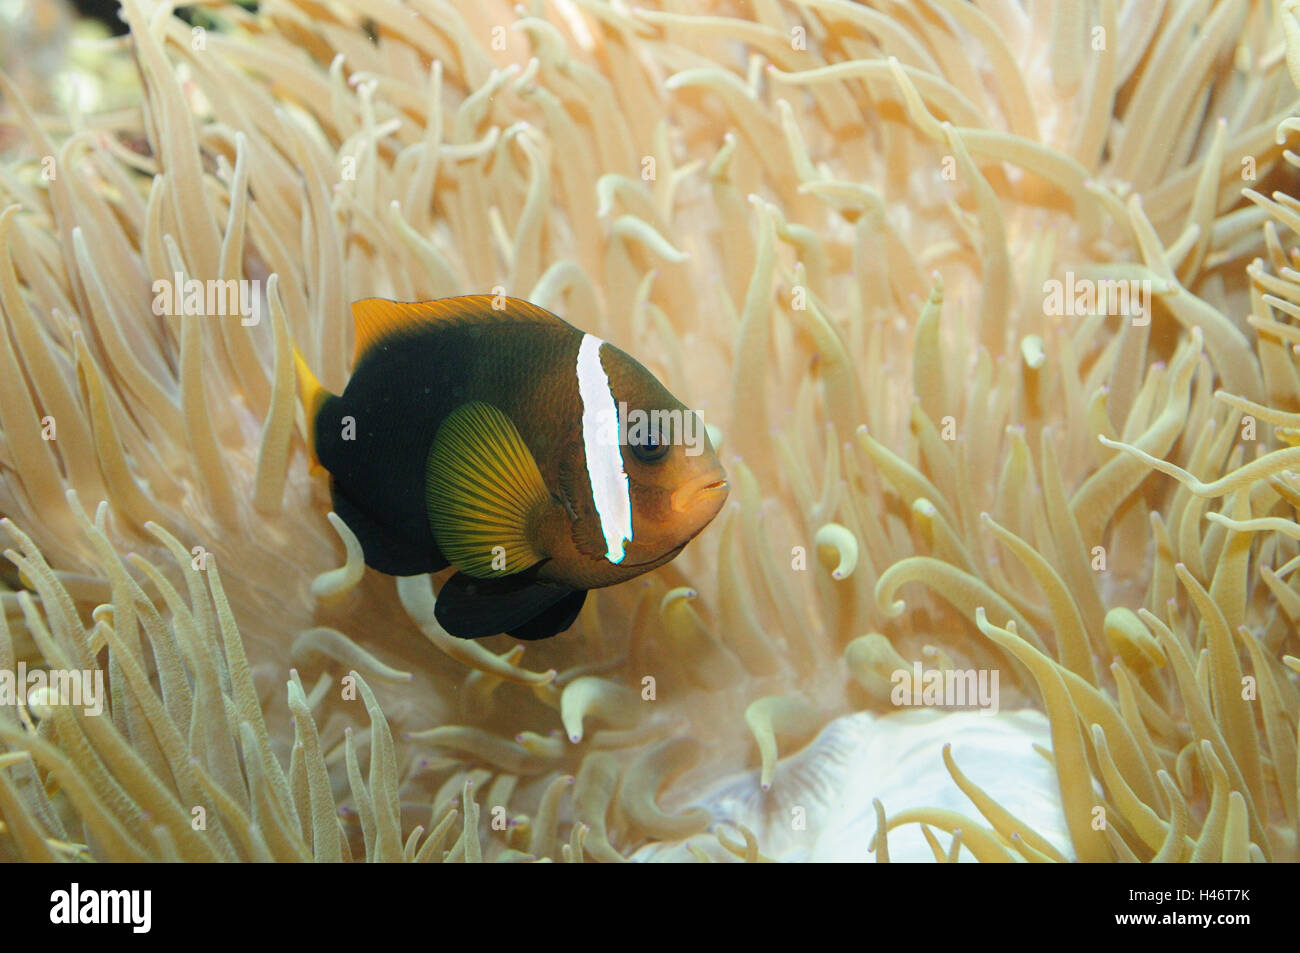 Tomato clownfish, Amphiprion frenatus, underwater, side view, swimming, Stock Photo